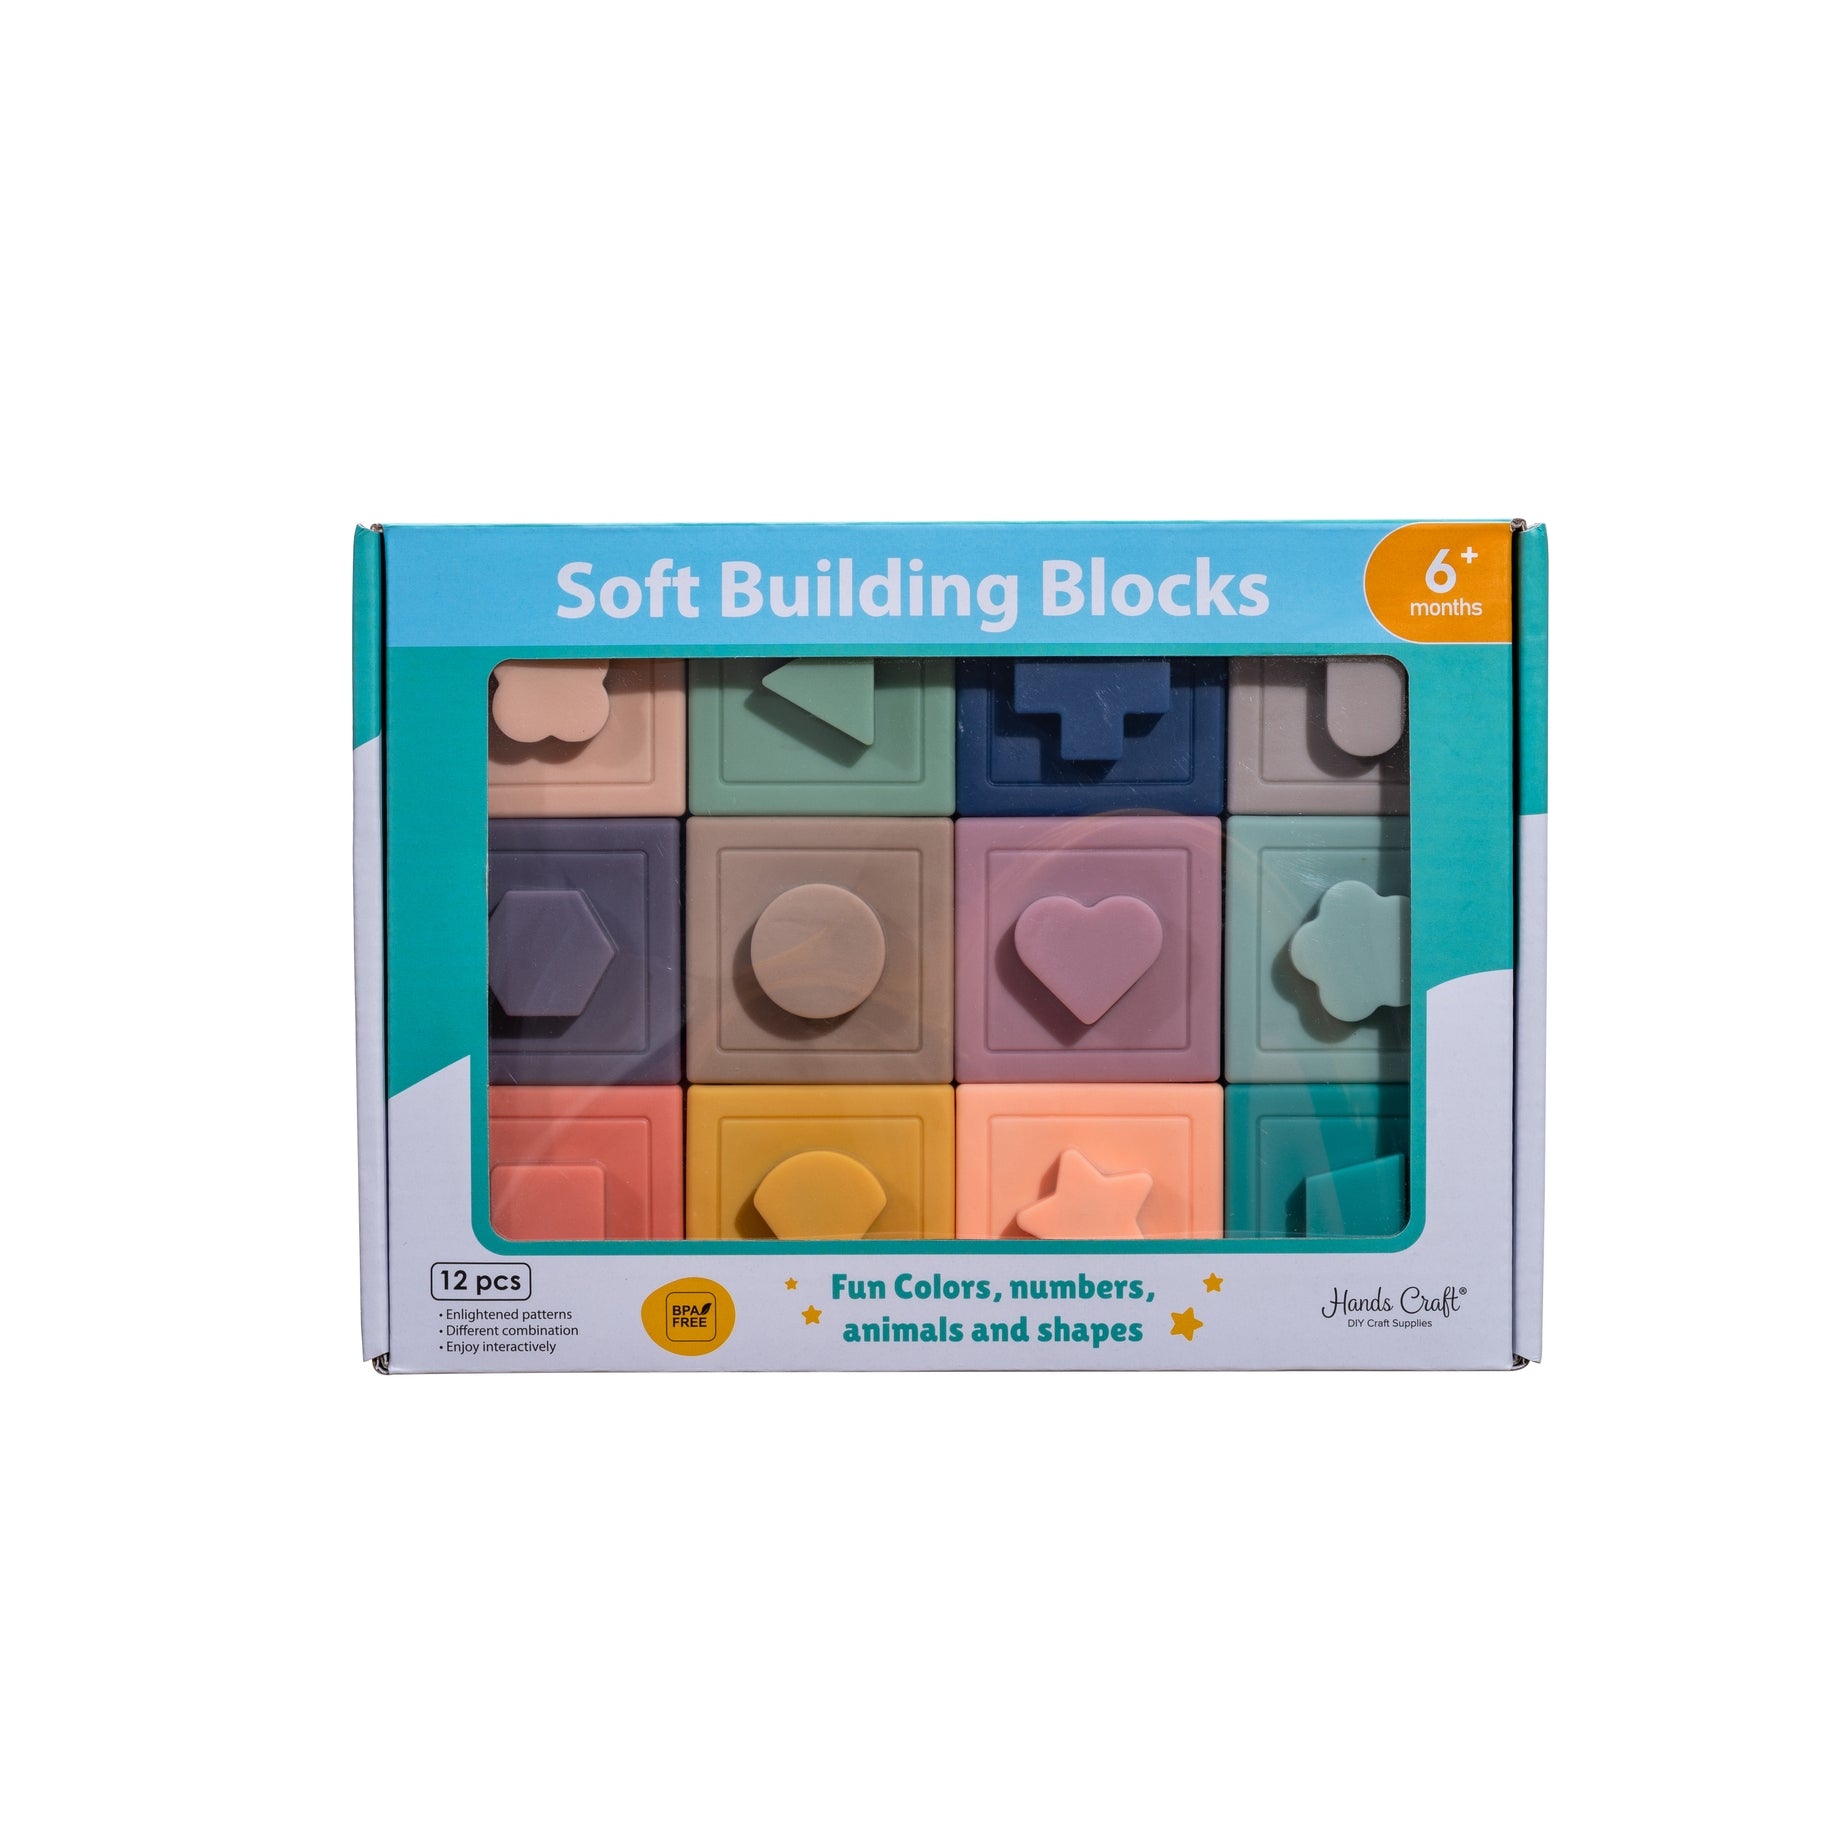 Bpa-Free Soft Silicone Building Blocks Toys Kids Circular